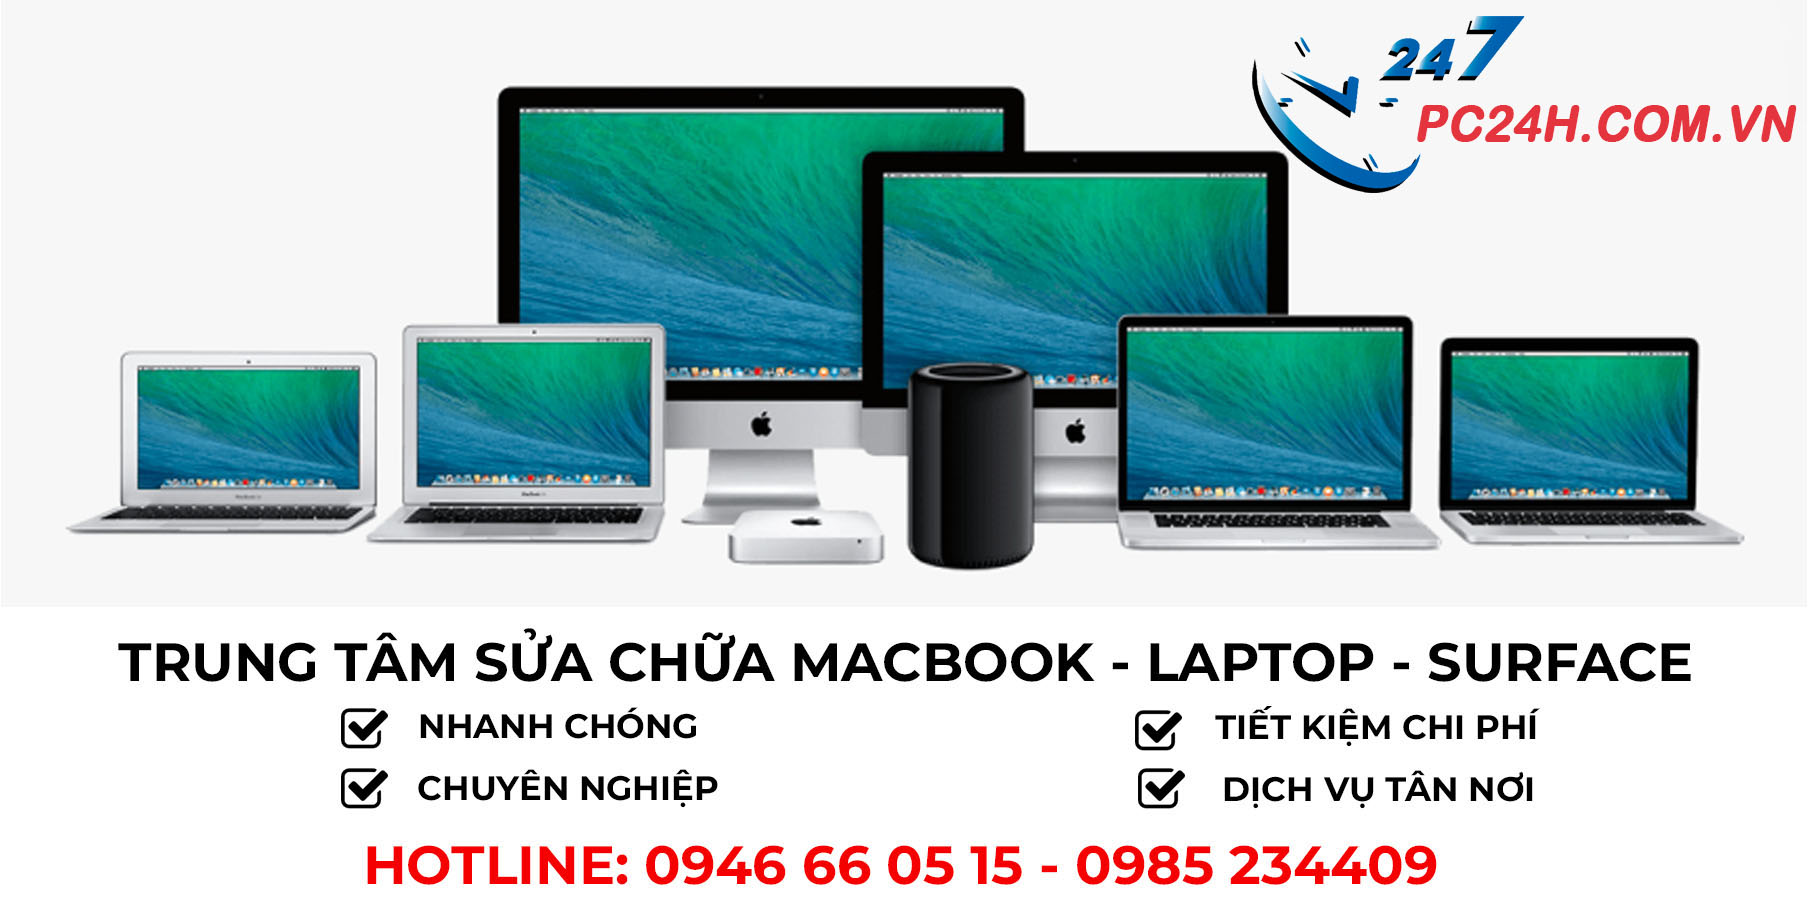 Sửa chữa Macbook - Laptop - Surface